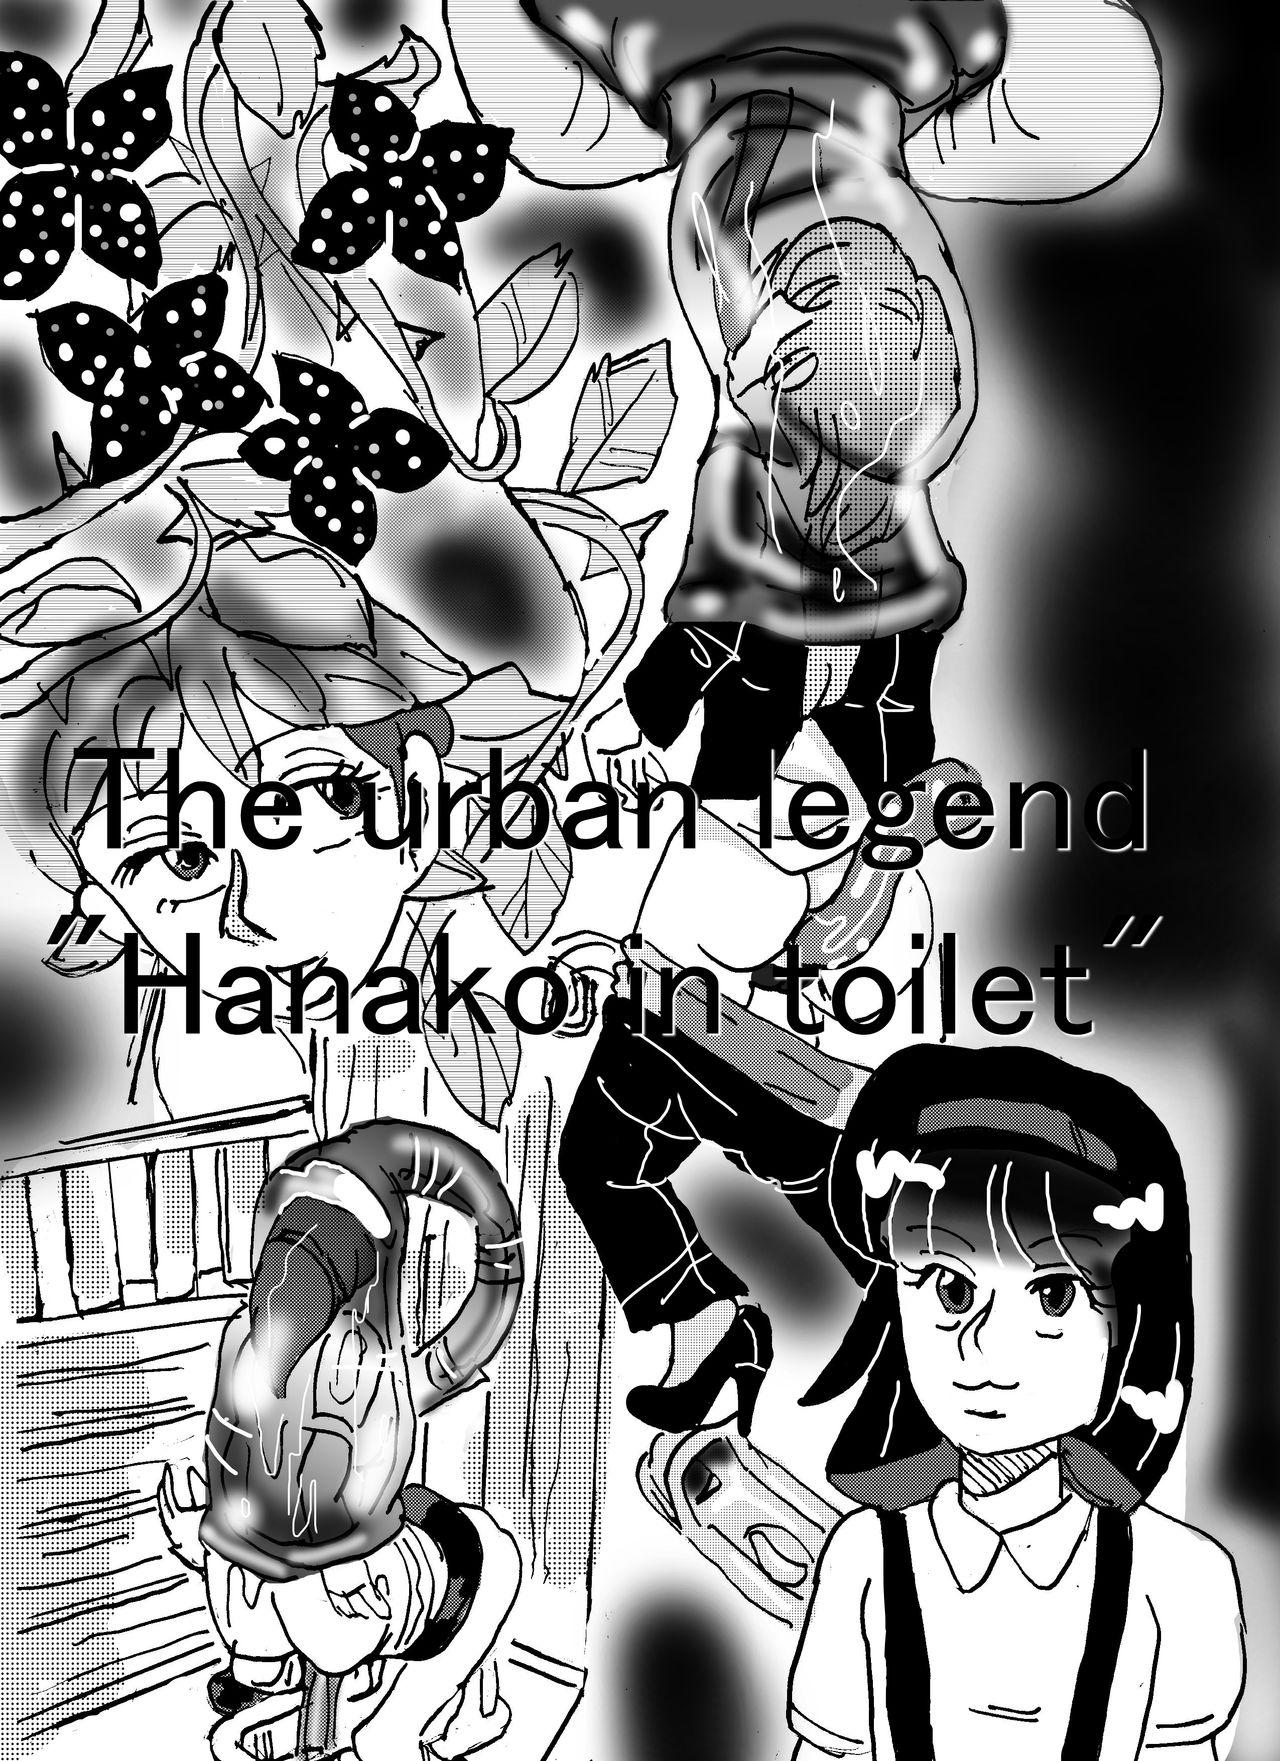 White Urban legend "Ha*ako in toilet" - Original Butt Plug - Page 1